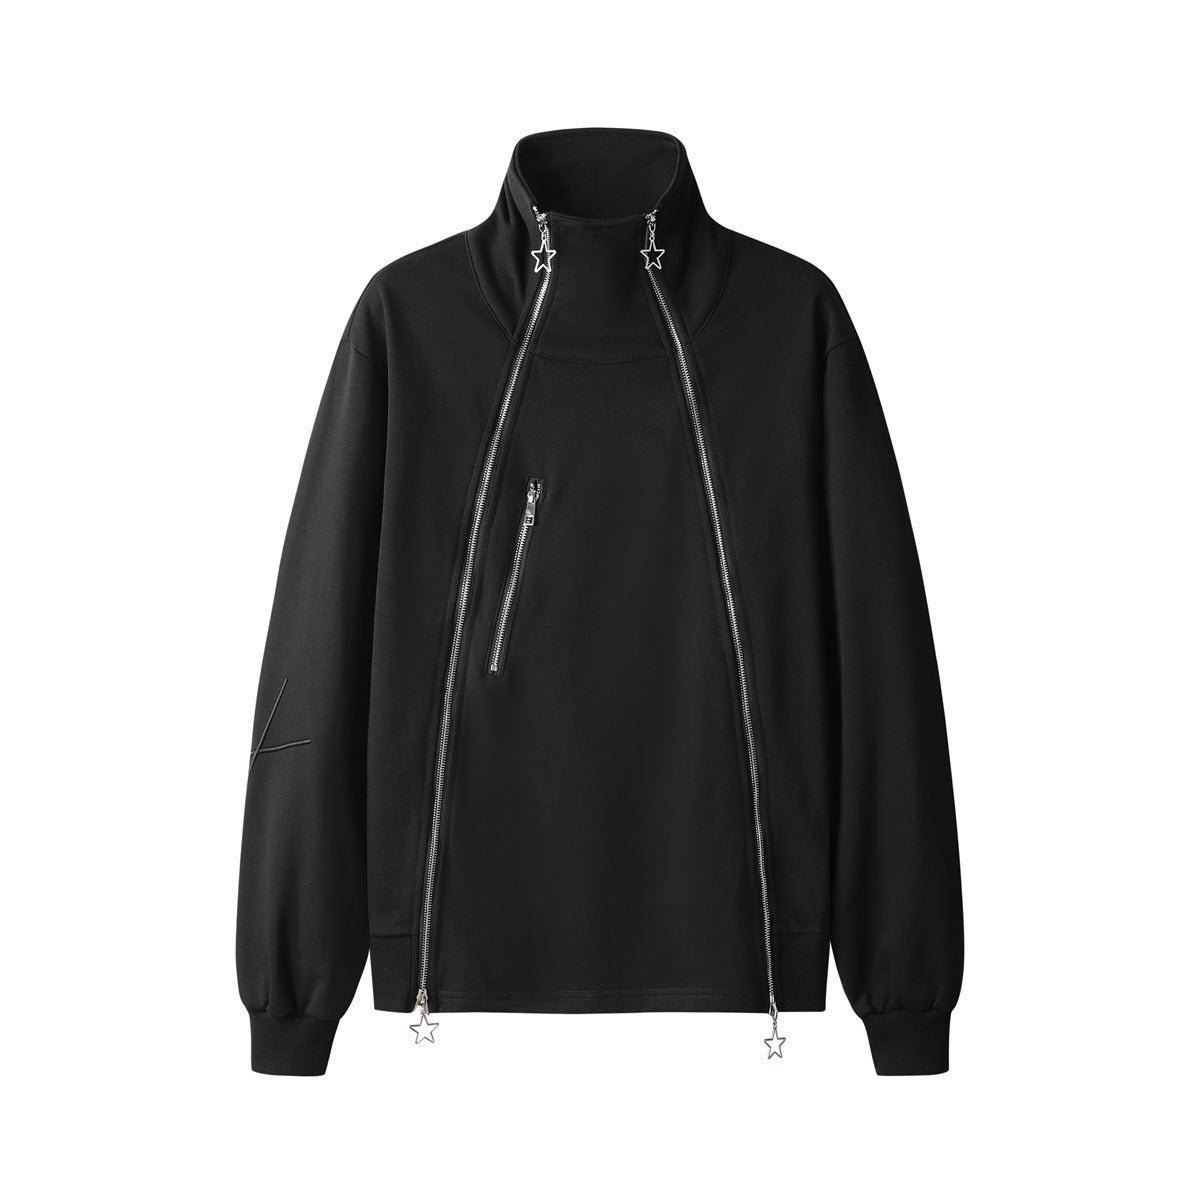 Unisex Half Turtleneck Double Zipper Sweatshirt